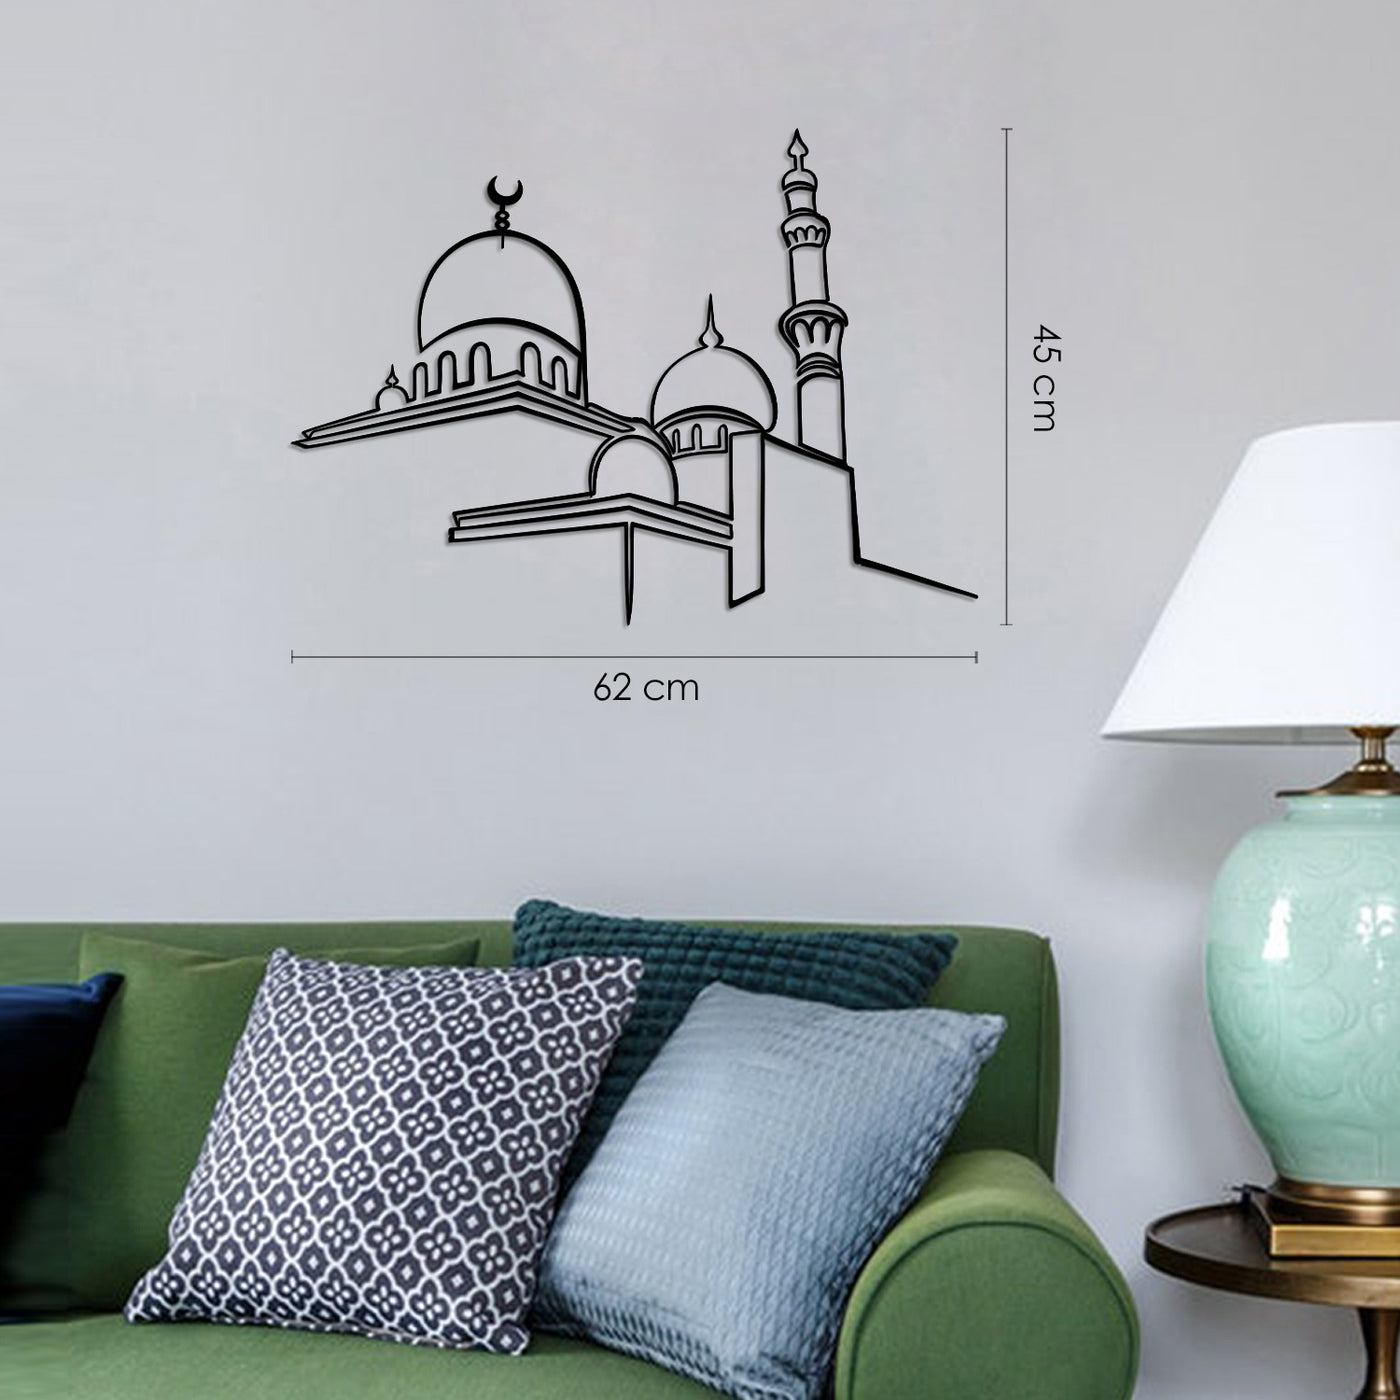 WAM159 - لوحة المسجد من فن الخط من المعدني